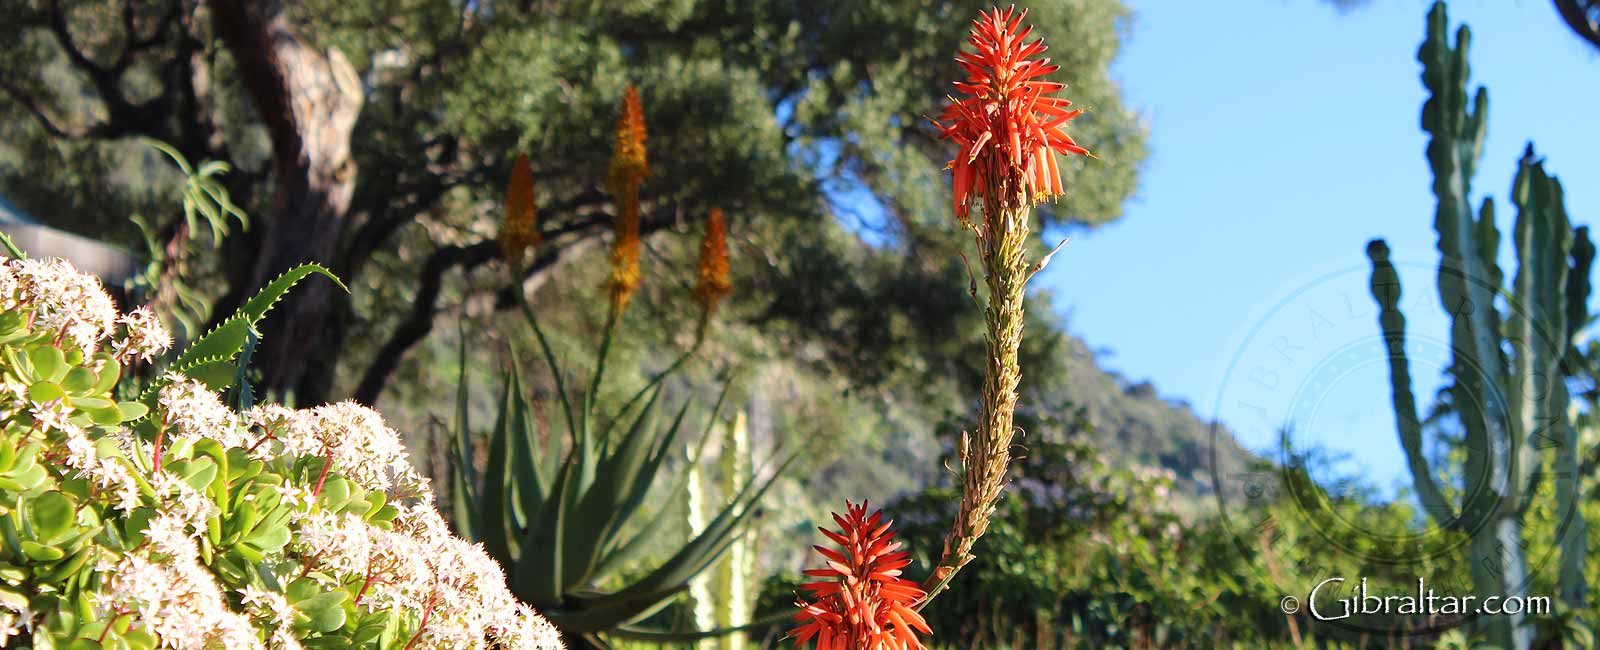 featured_alameda-botanic-gardens-gibraltar